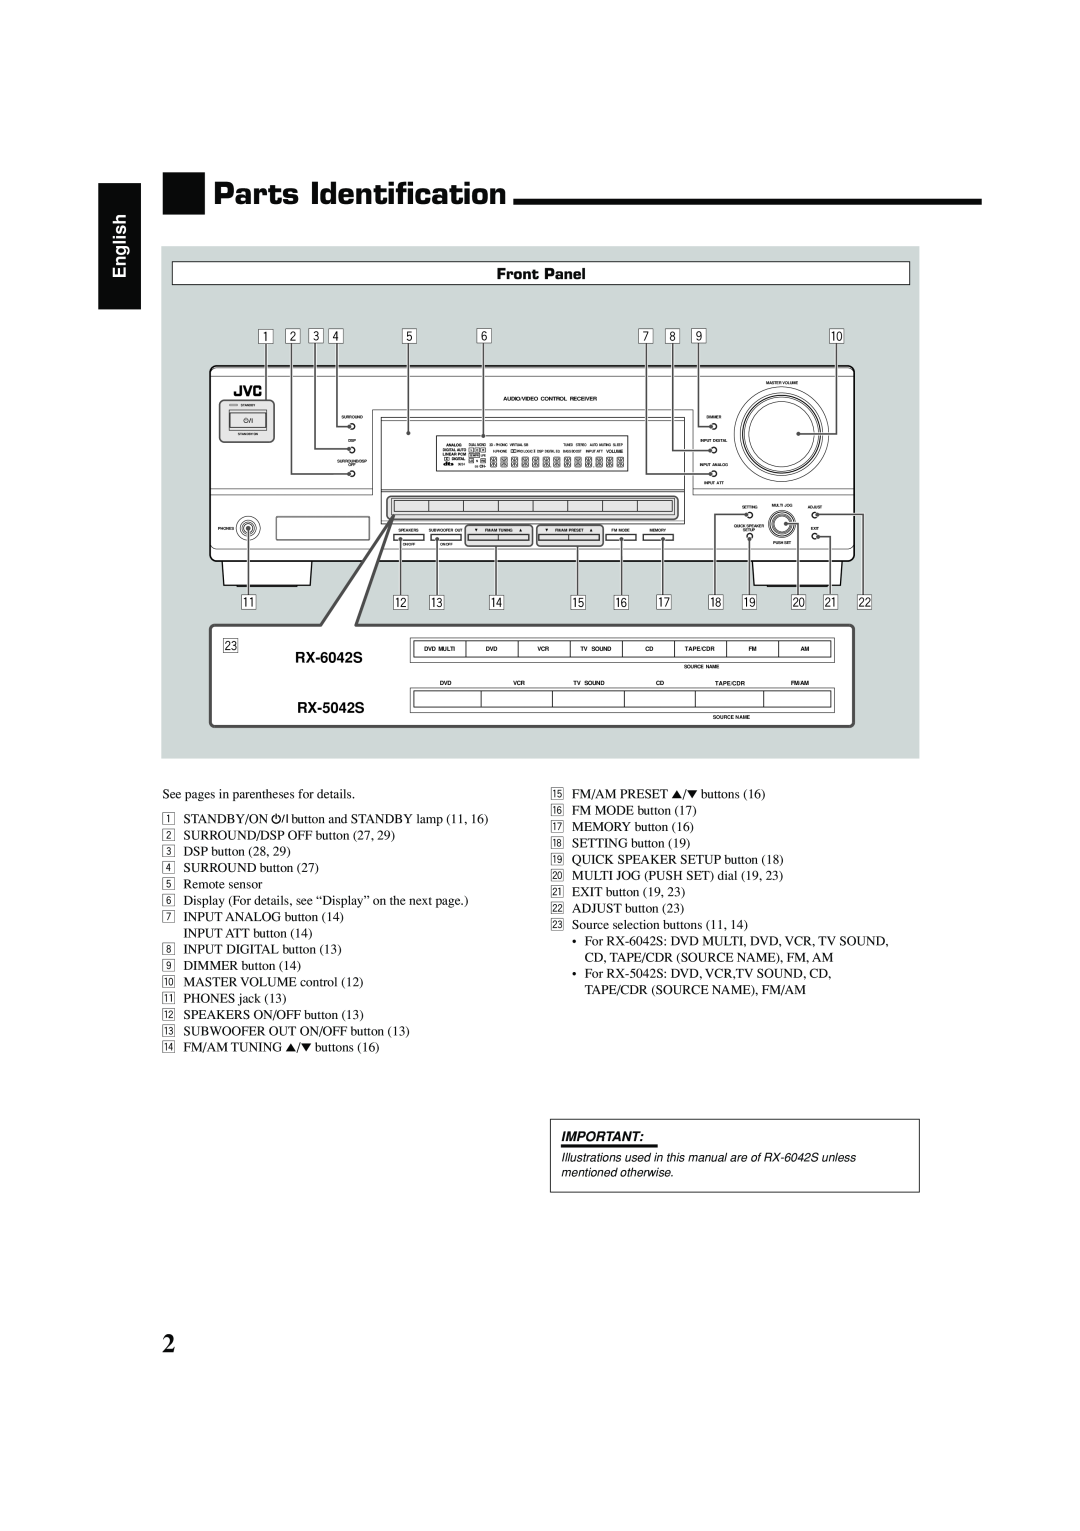 JVC LVT1140-004A manual Parts Identification, English 